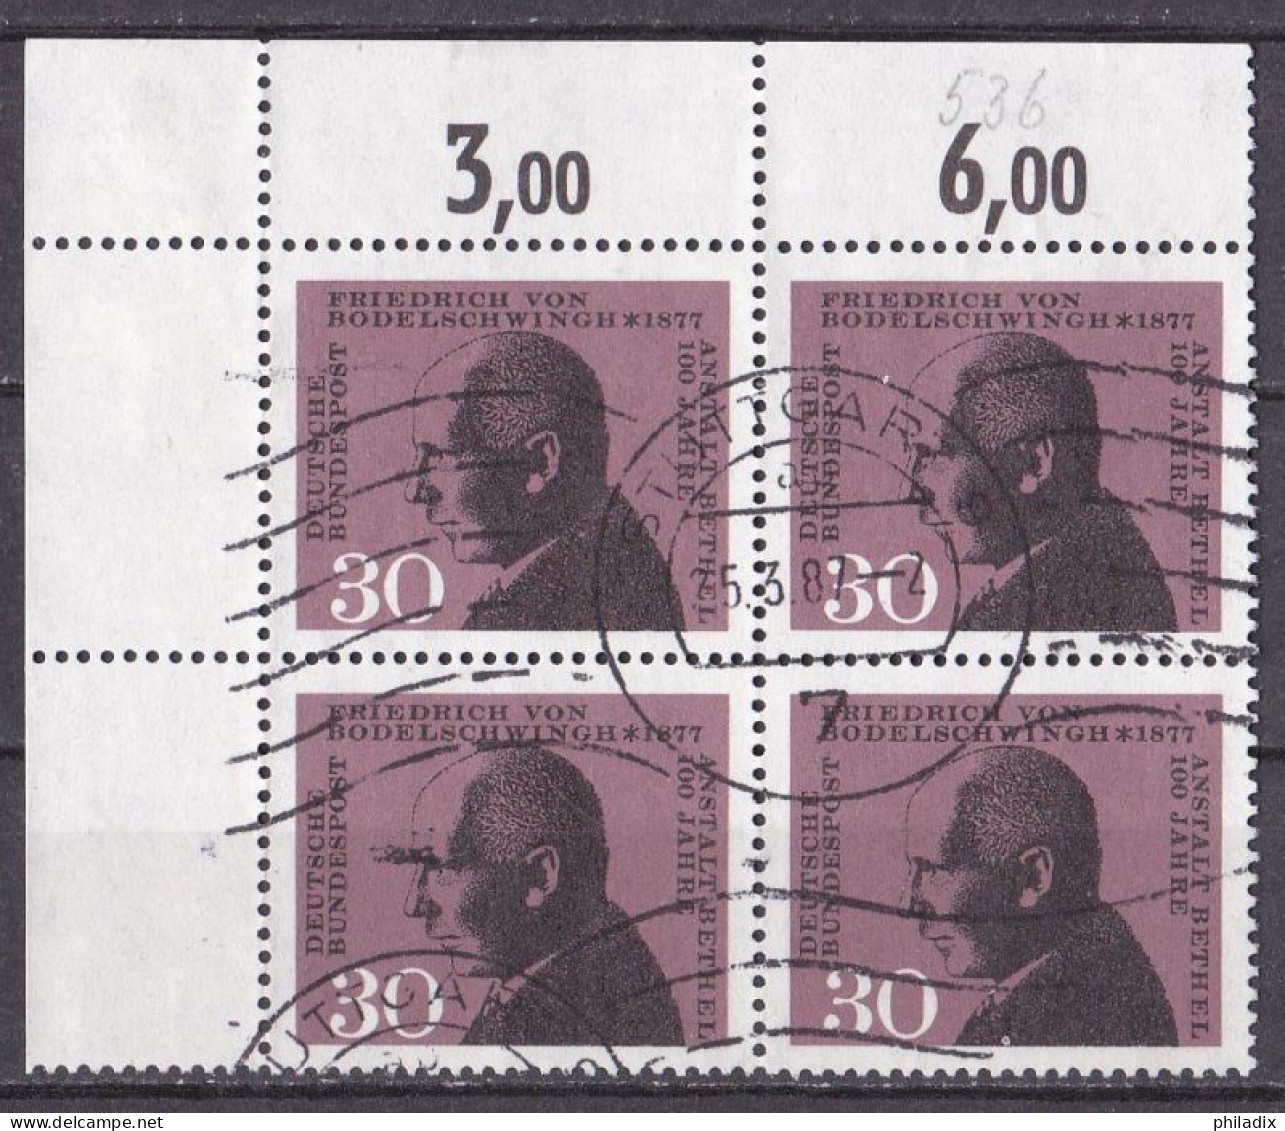 BRD 1967 Mi. Nr. 537 Eckrand Viererblock Vollstempel O/used (BRD1-5) - Used Stamps